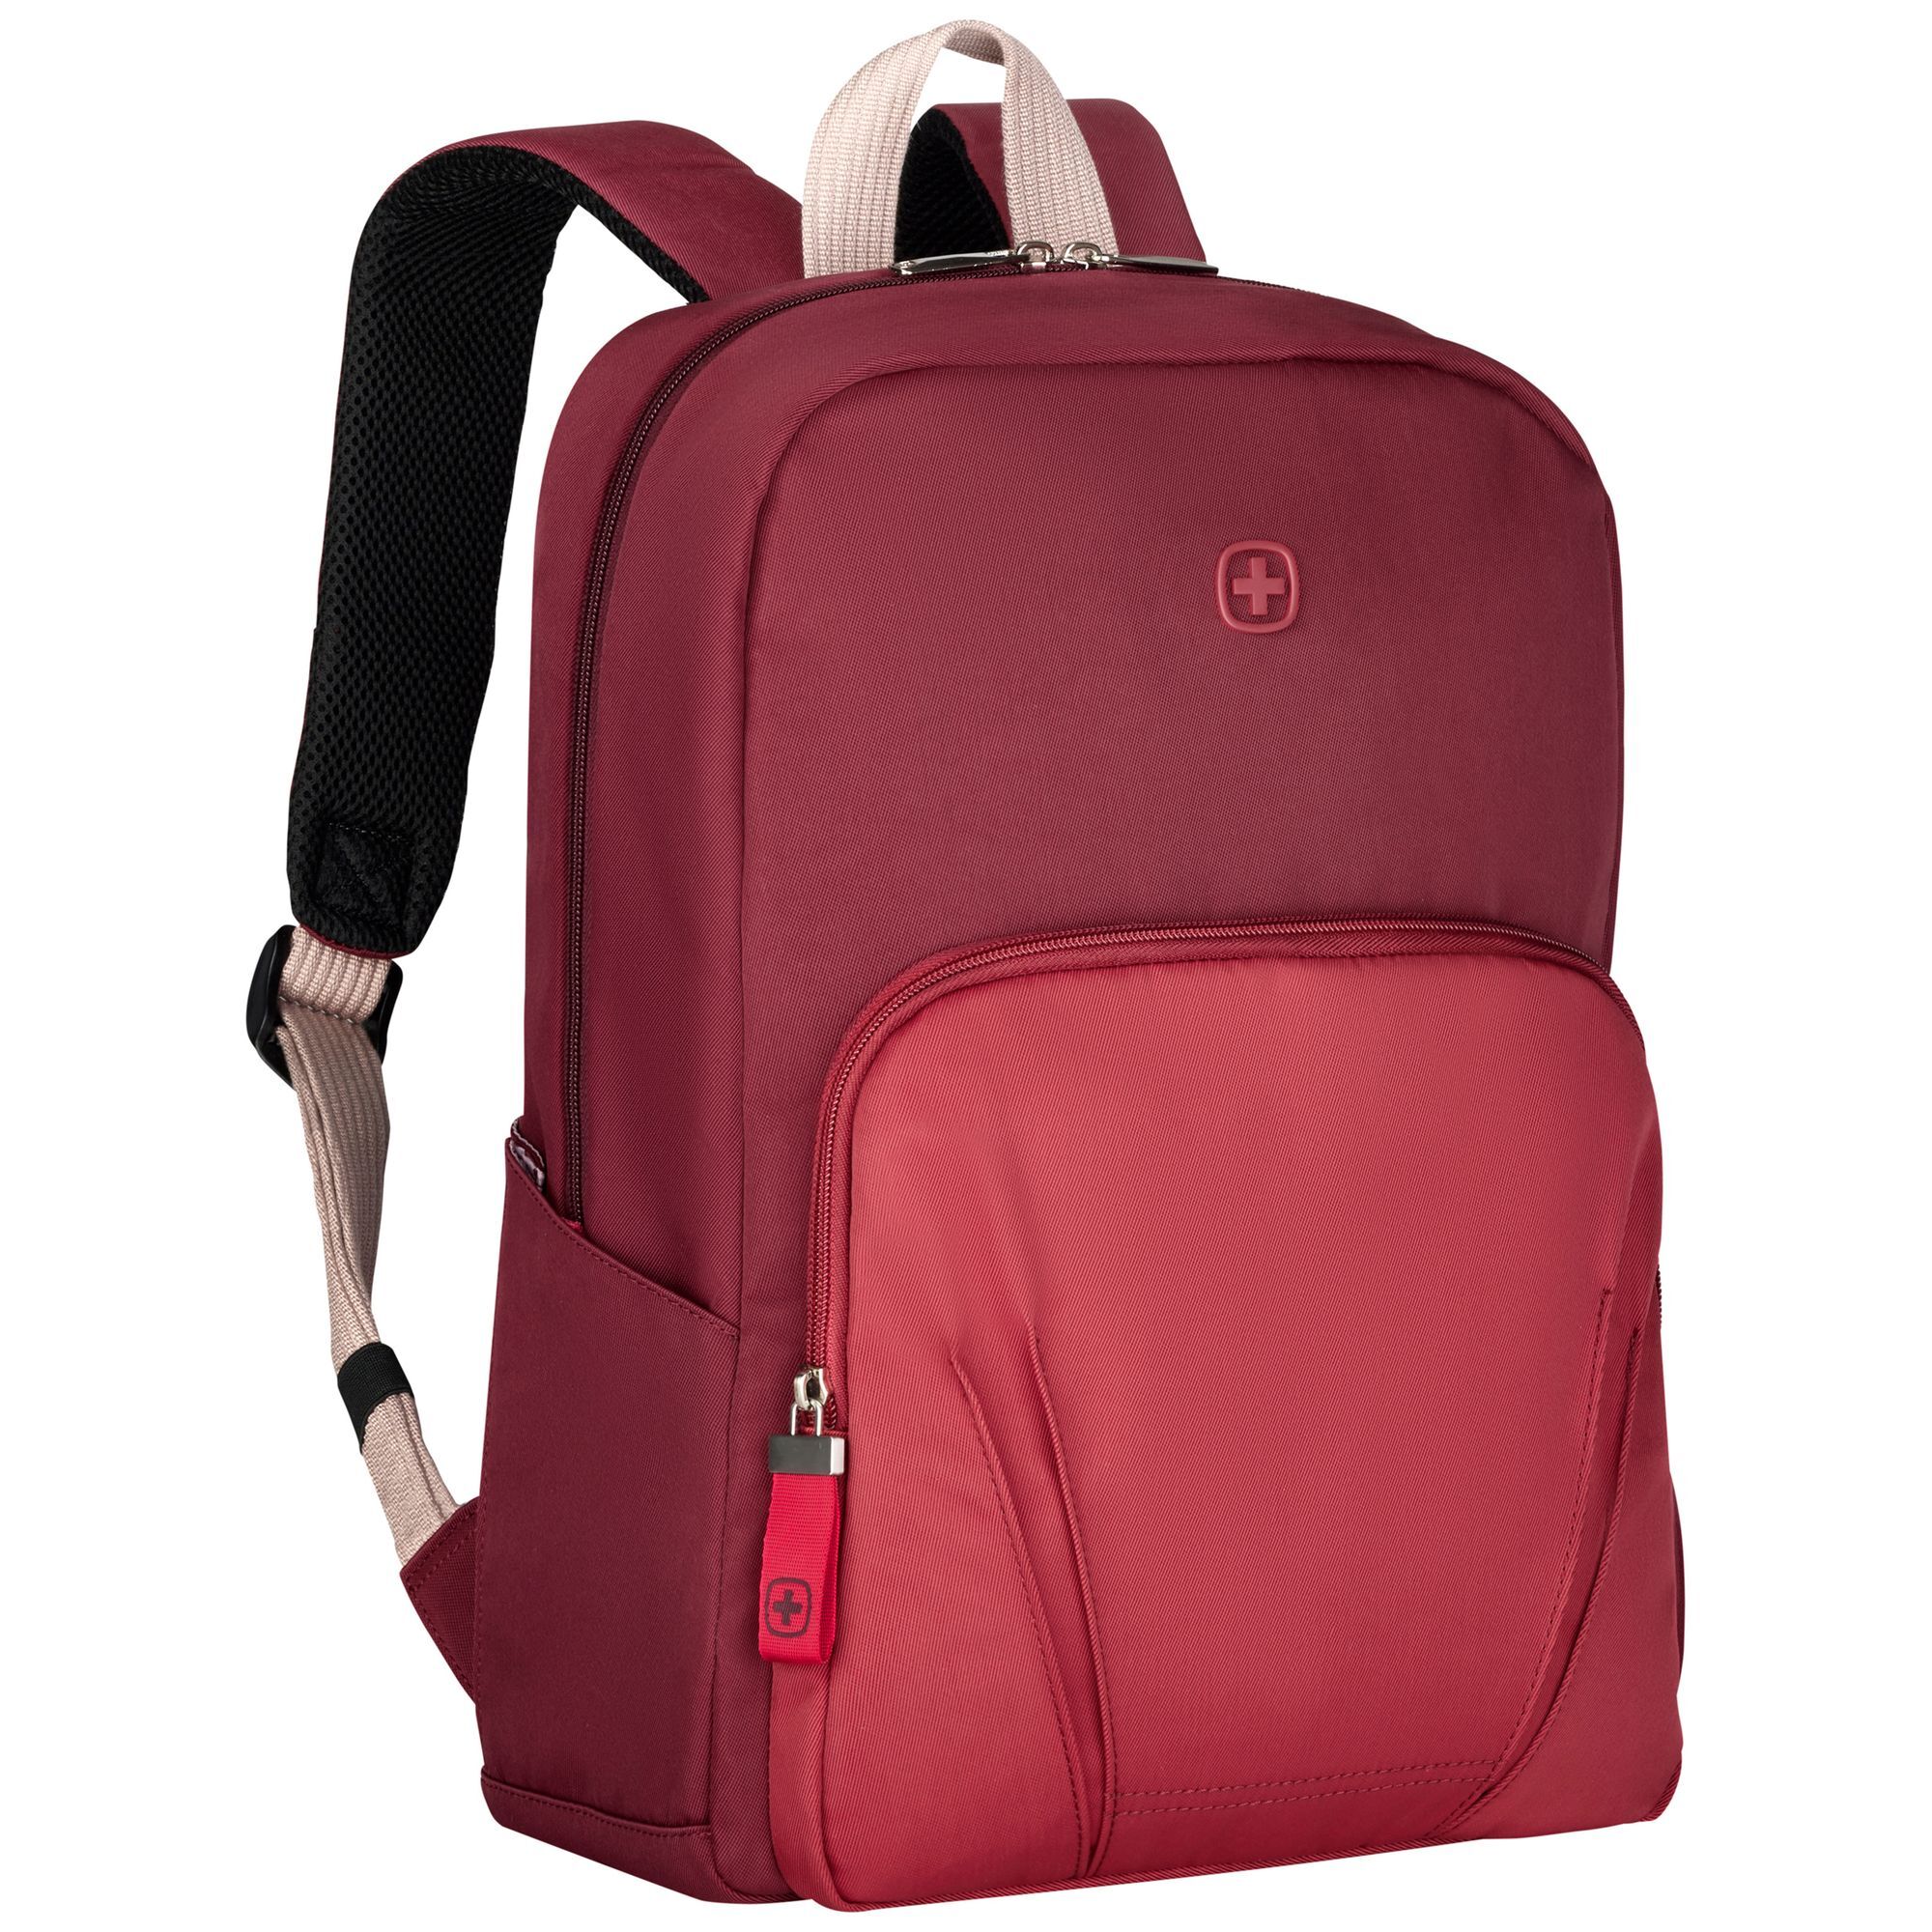 Рюкзак Wenger Motion 42 cm Laptopfach, цвет digital red рюкзак wenger crango 46 cm laptopfach цвет gravity black